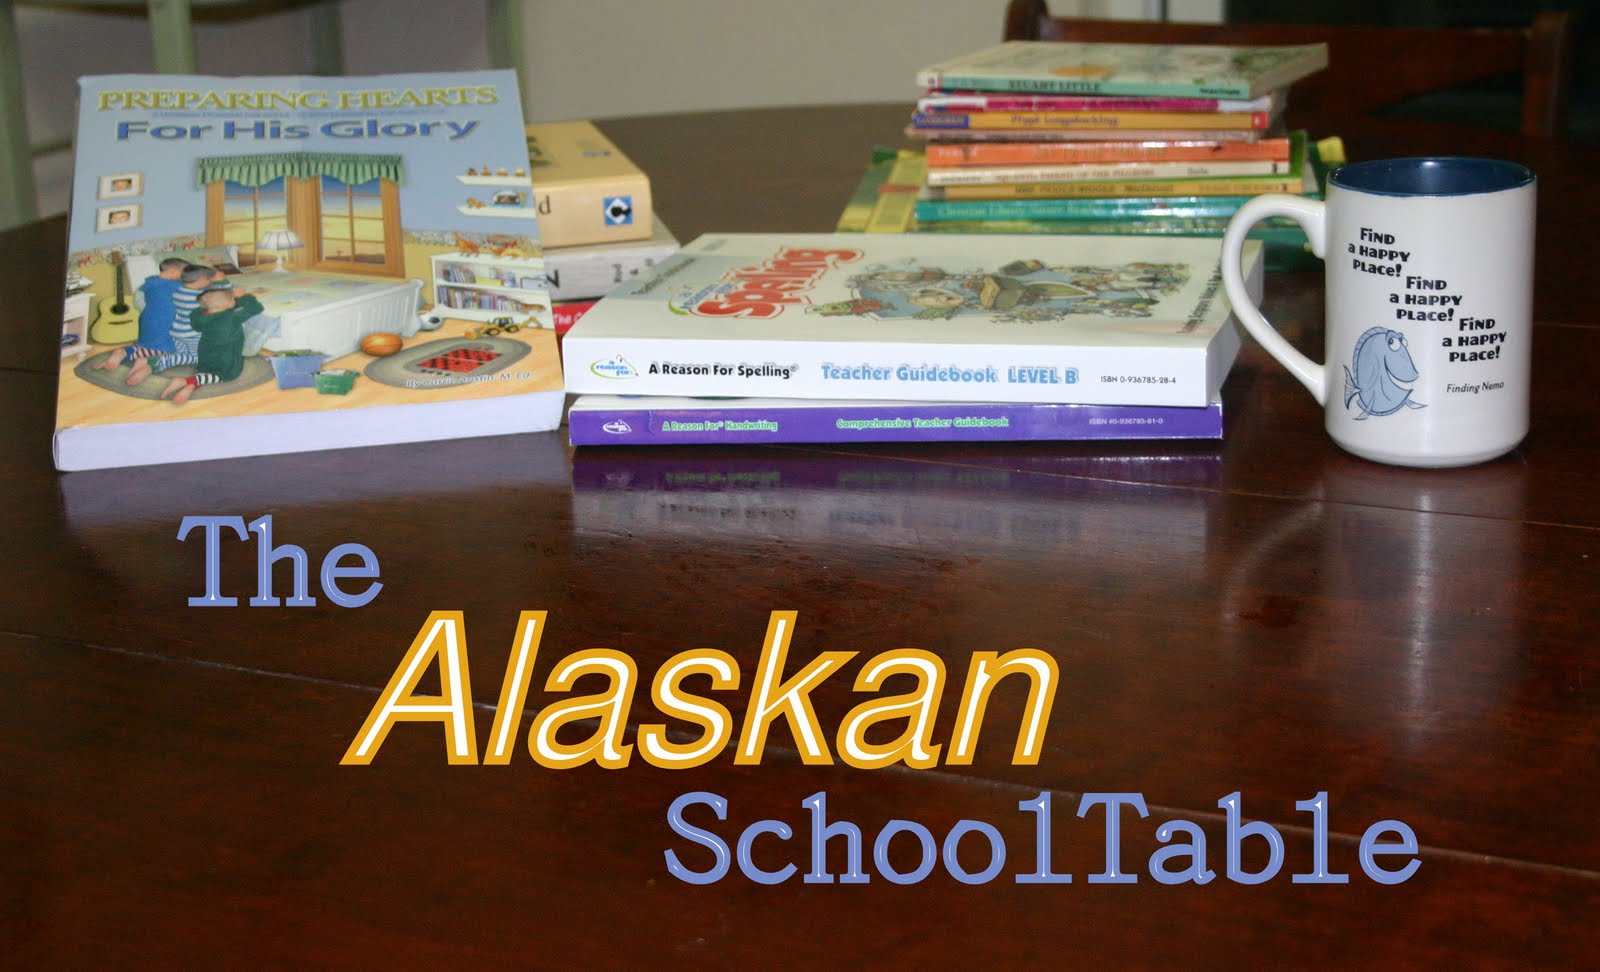 The Alaskan School Table